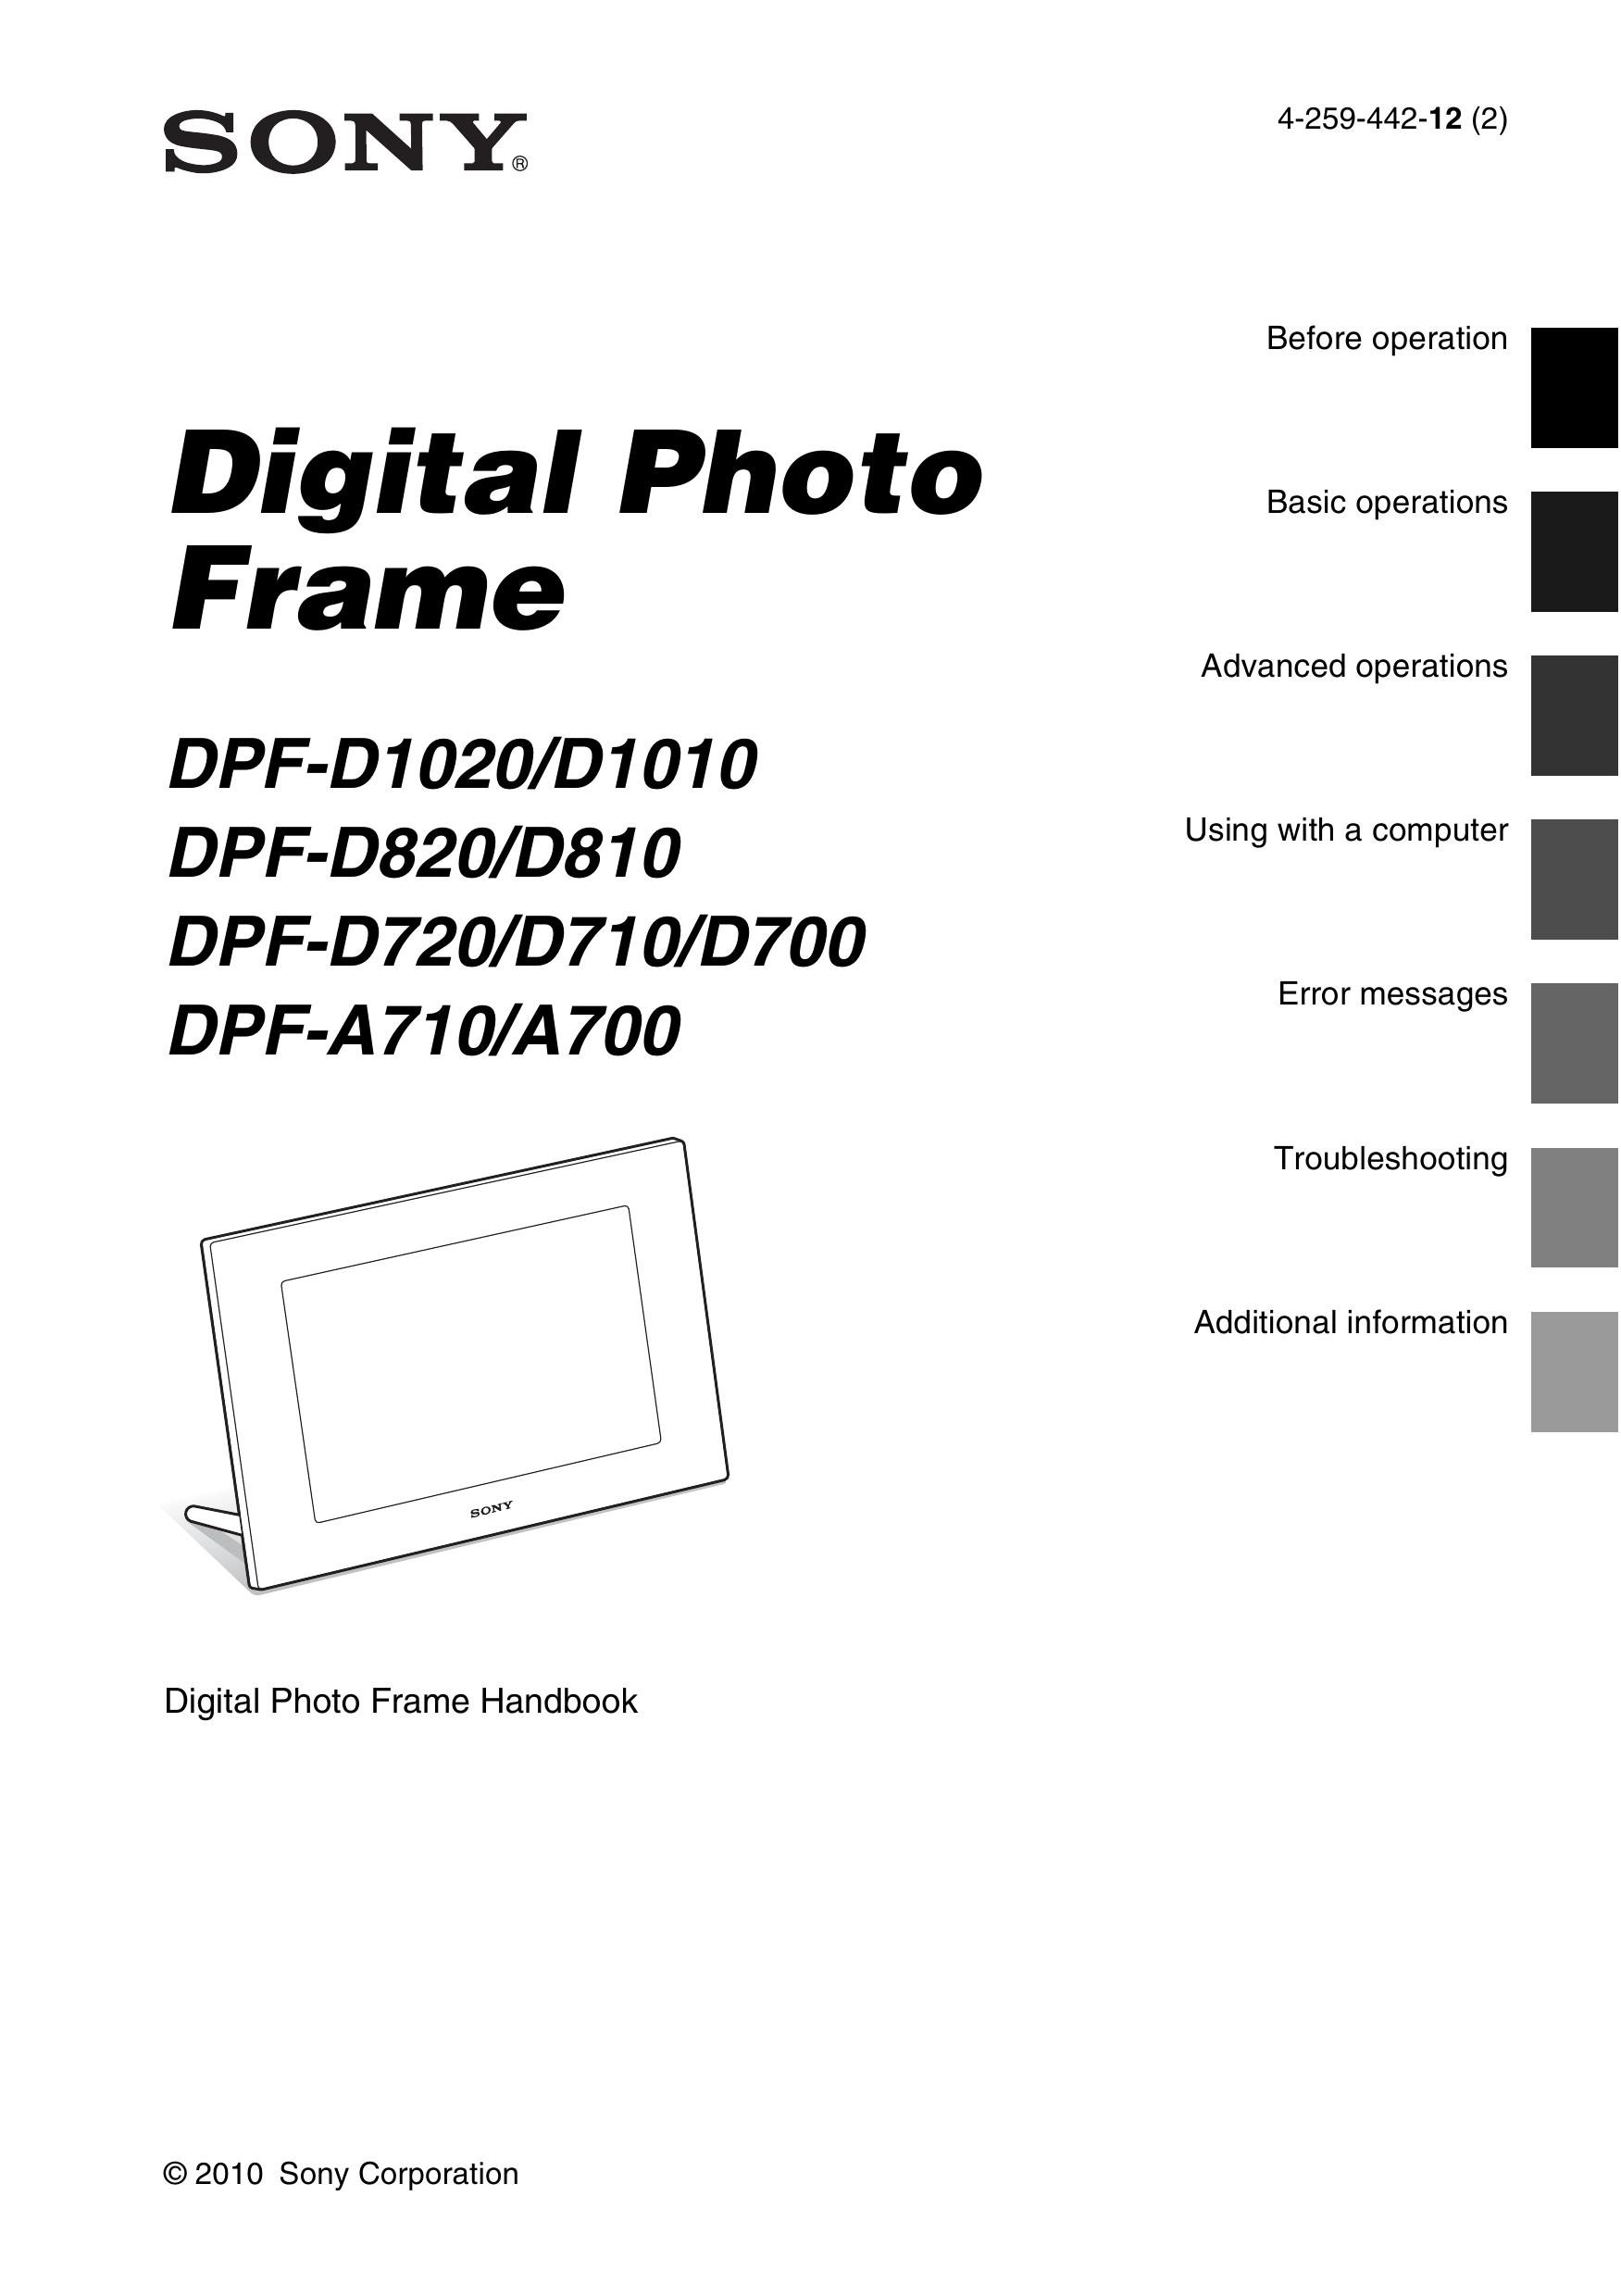 Sony DPF-D1020/D1010 Digital Photo Frame User Manual